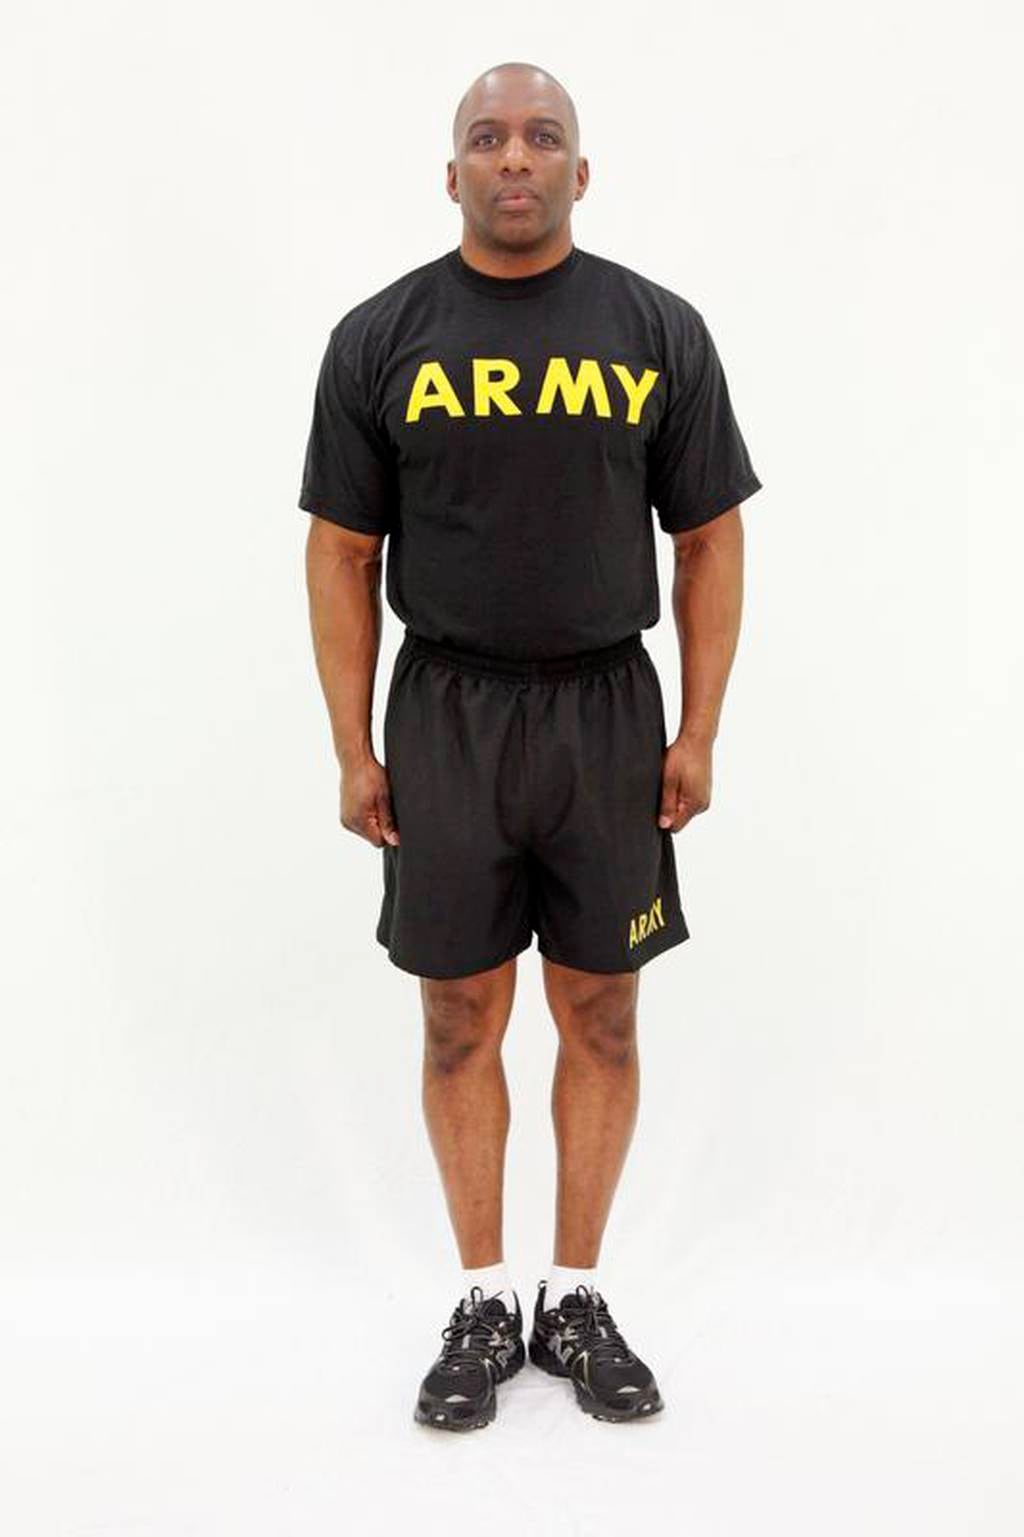 Army Physical Fitness Long Sleeve Shirt Uniform, IPFU [Genuine Issue]